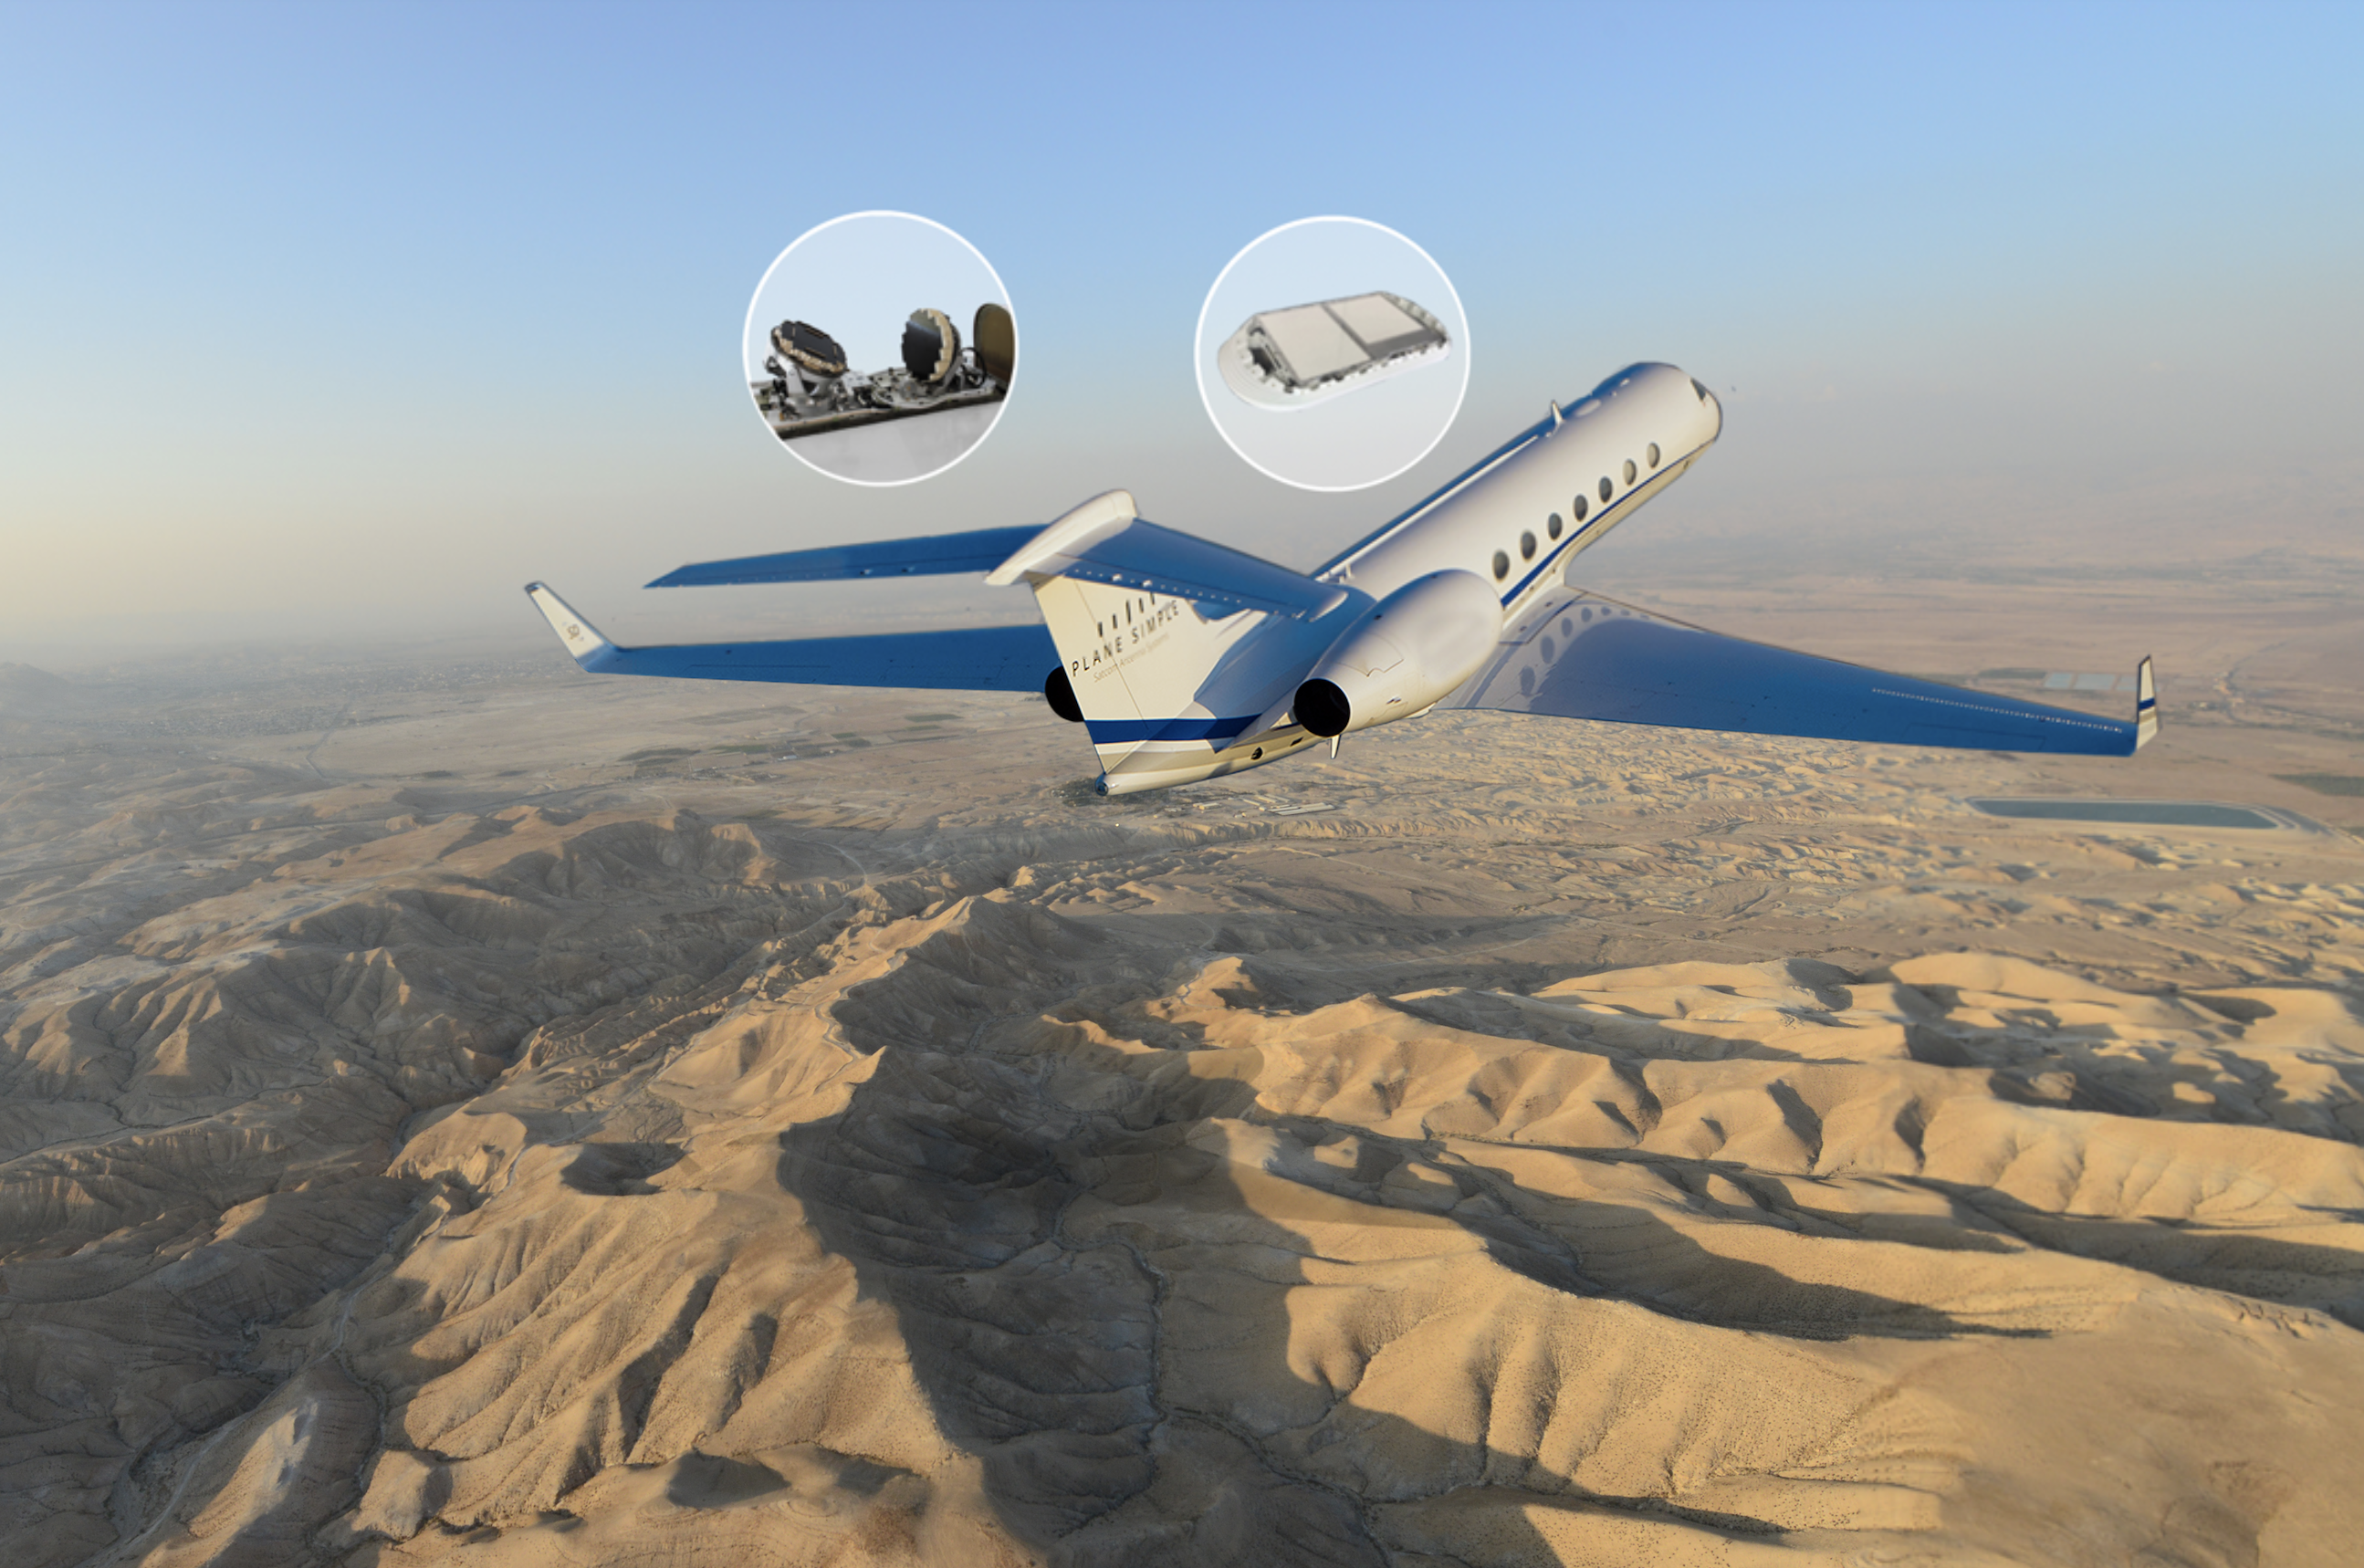 Dubai Airshow airplane over desert